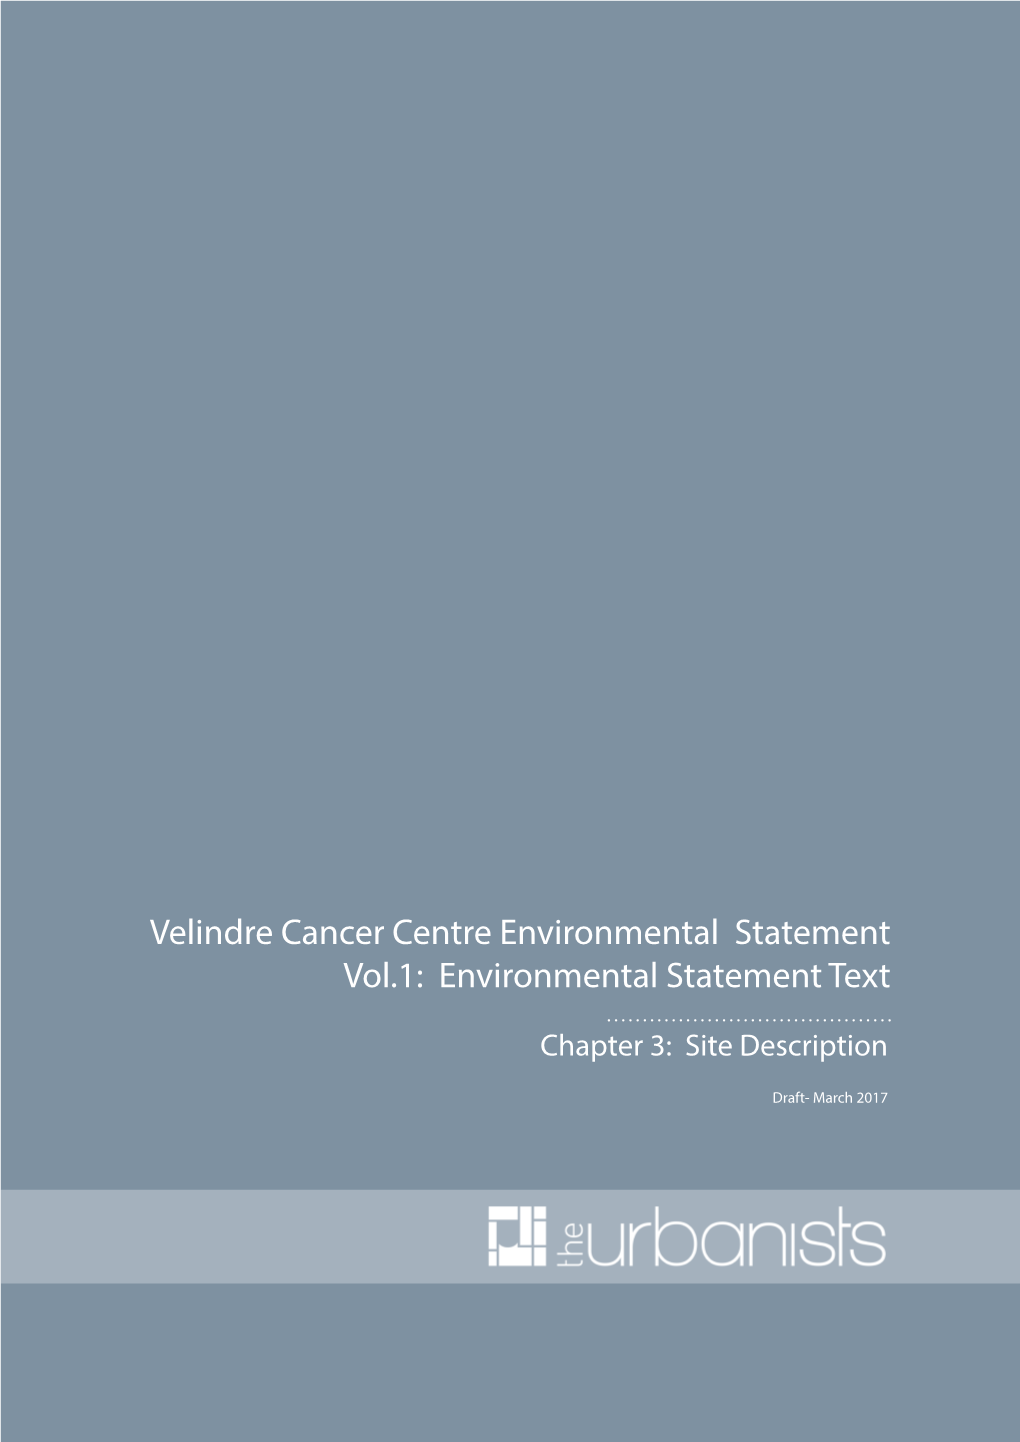 Velindre Cancer Centre Environmental Statement Vol.1: Environmental Statement Text